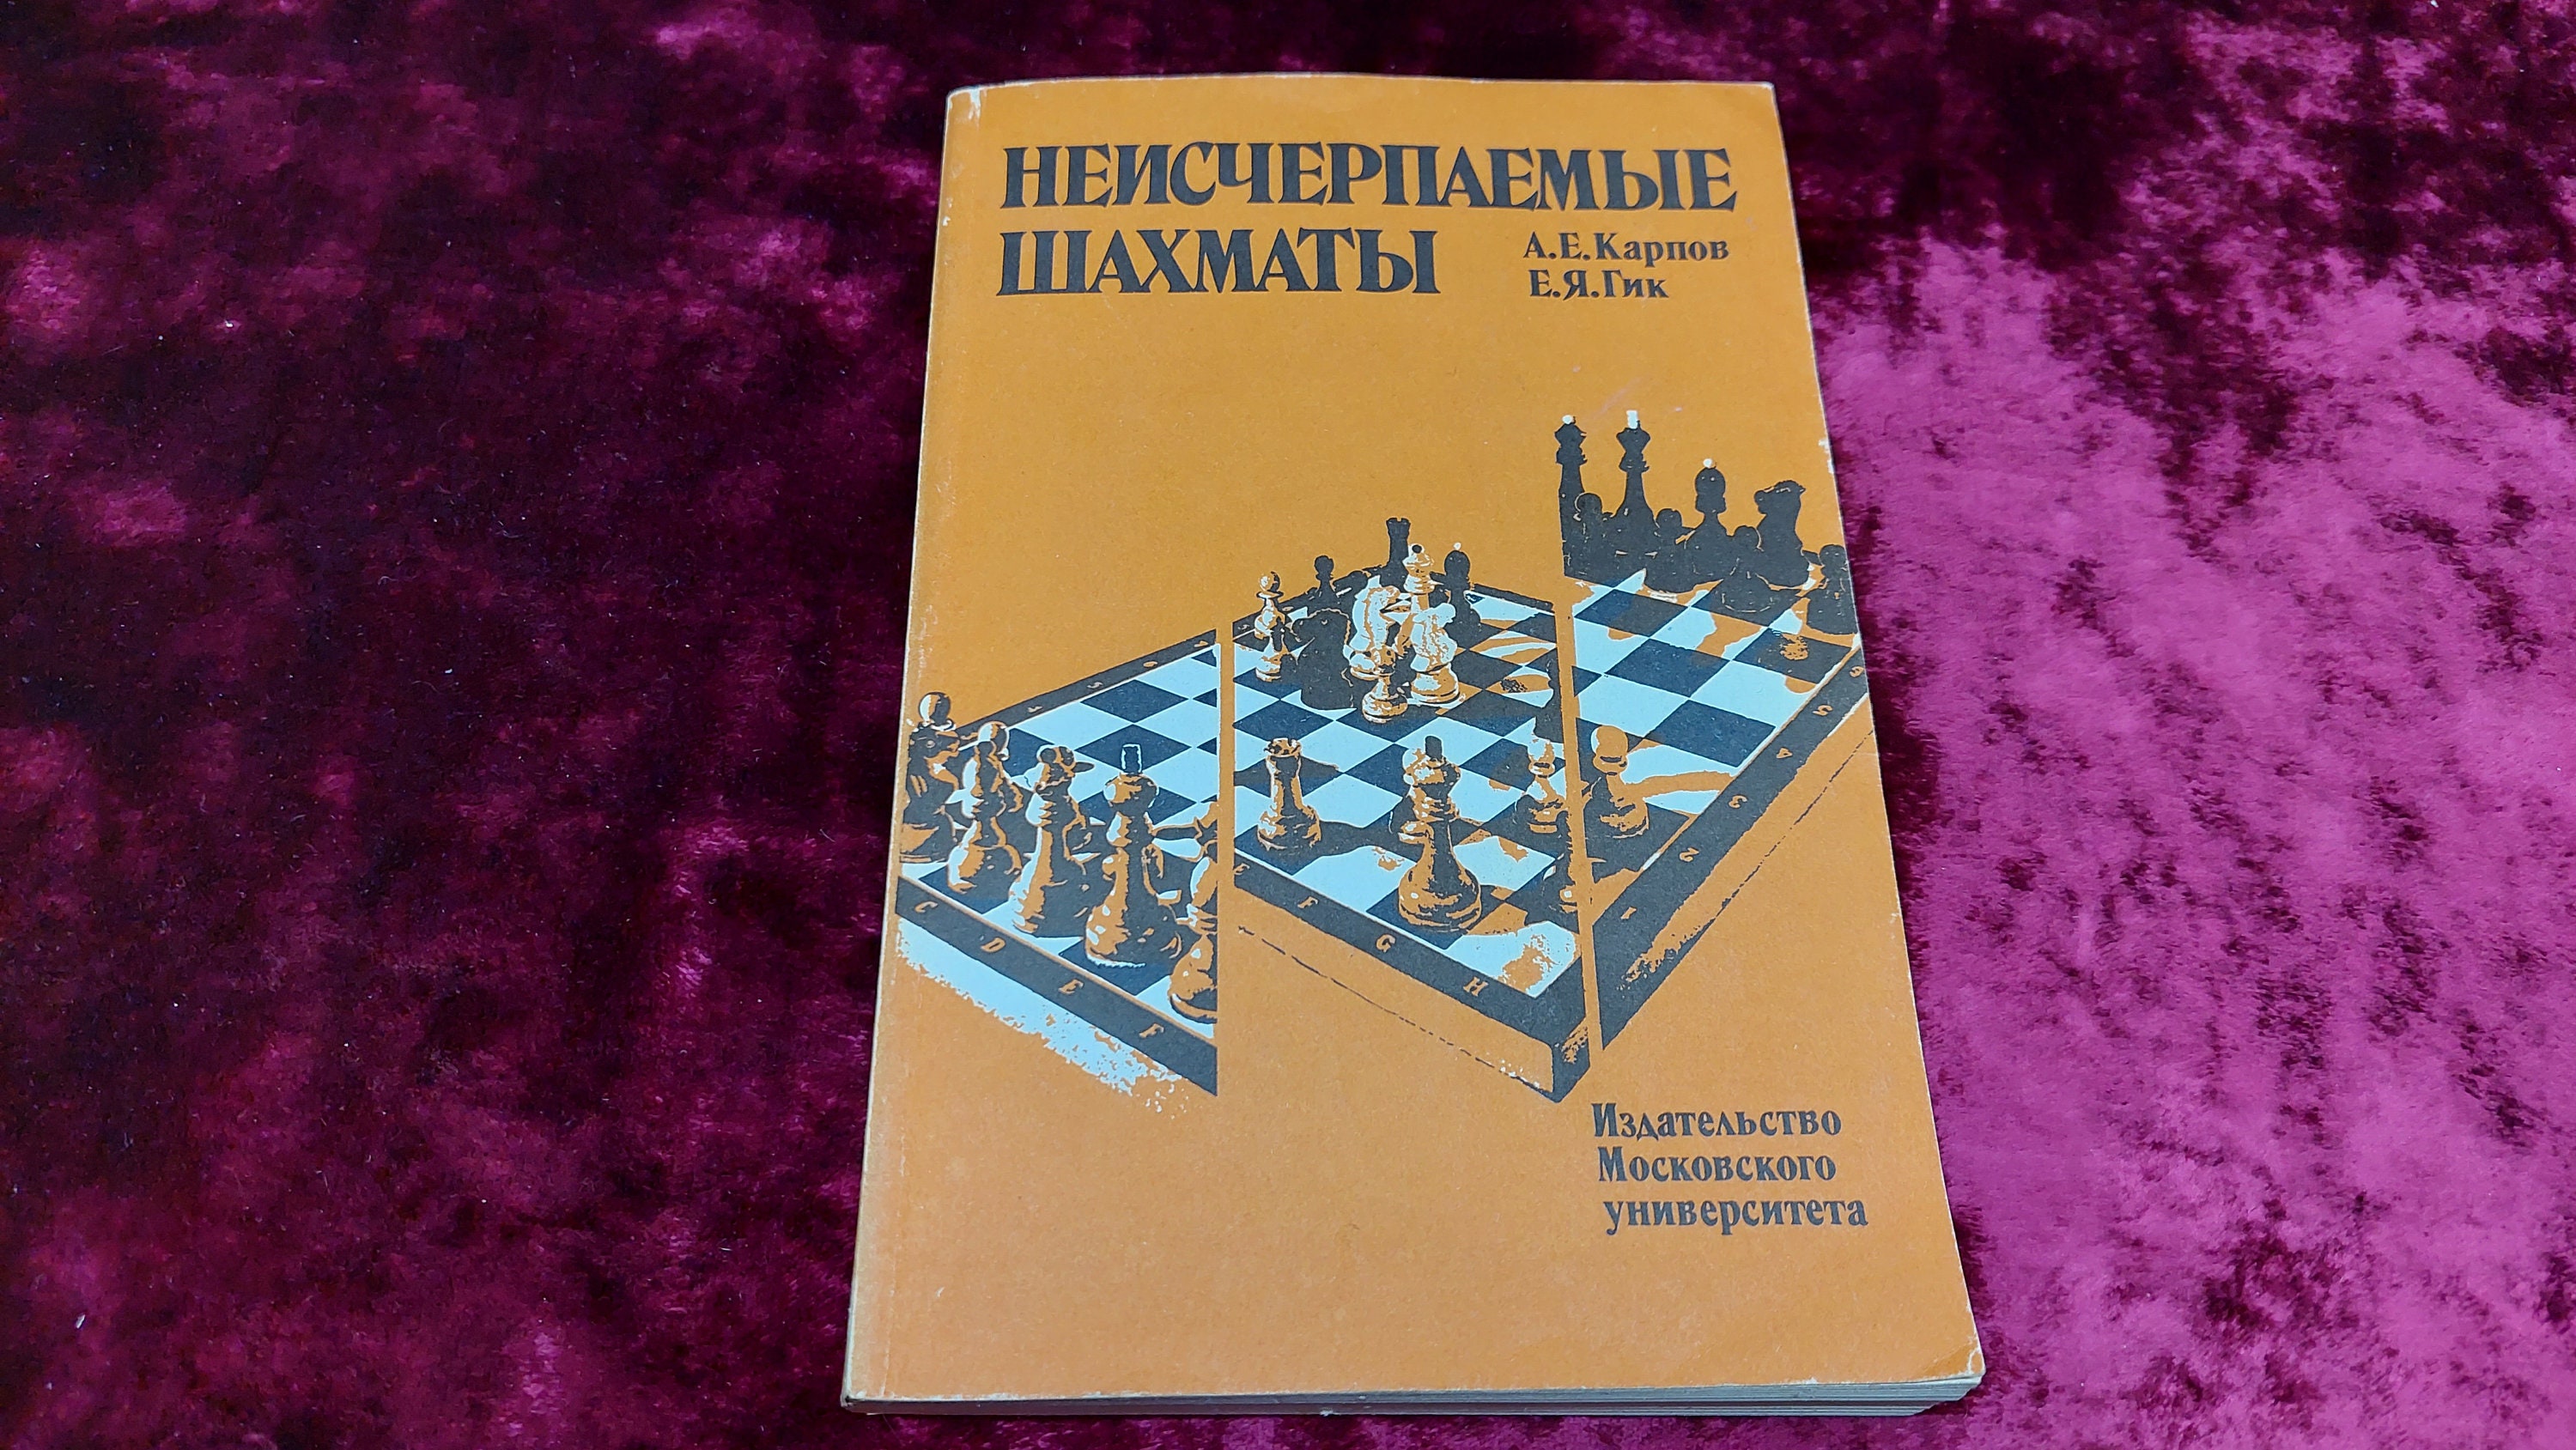 CHESS. Неисчерпаемые шахматы. КАРПОВ. Гик. Karpov. Gik. Russian book USSR  1984